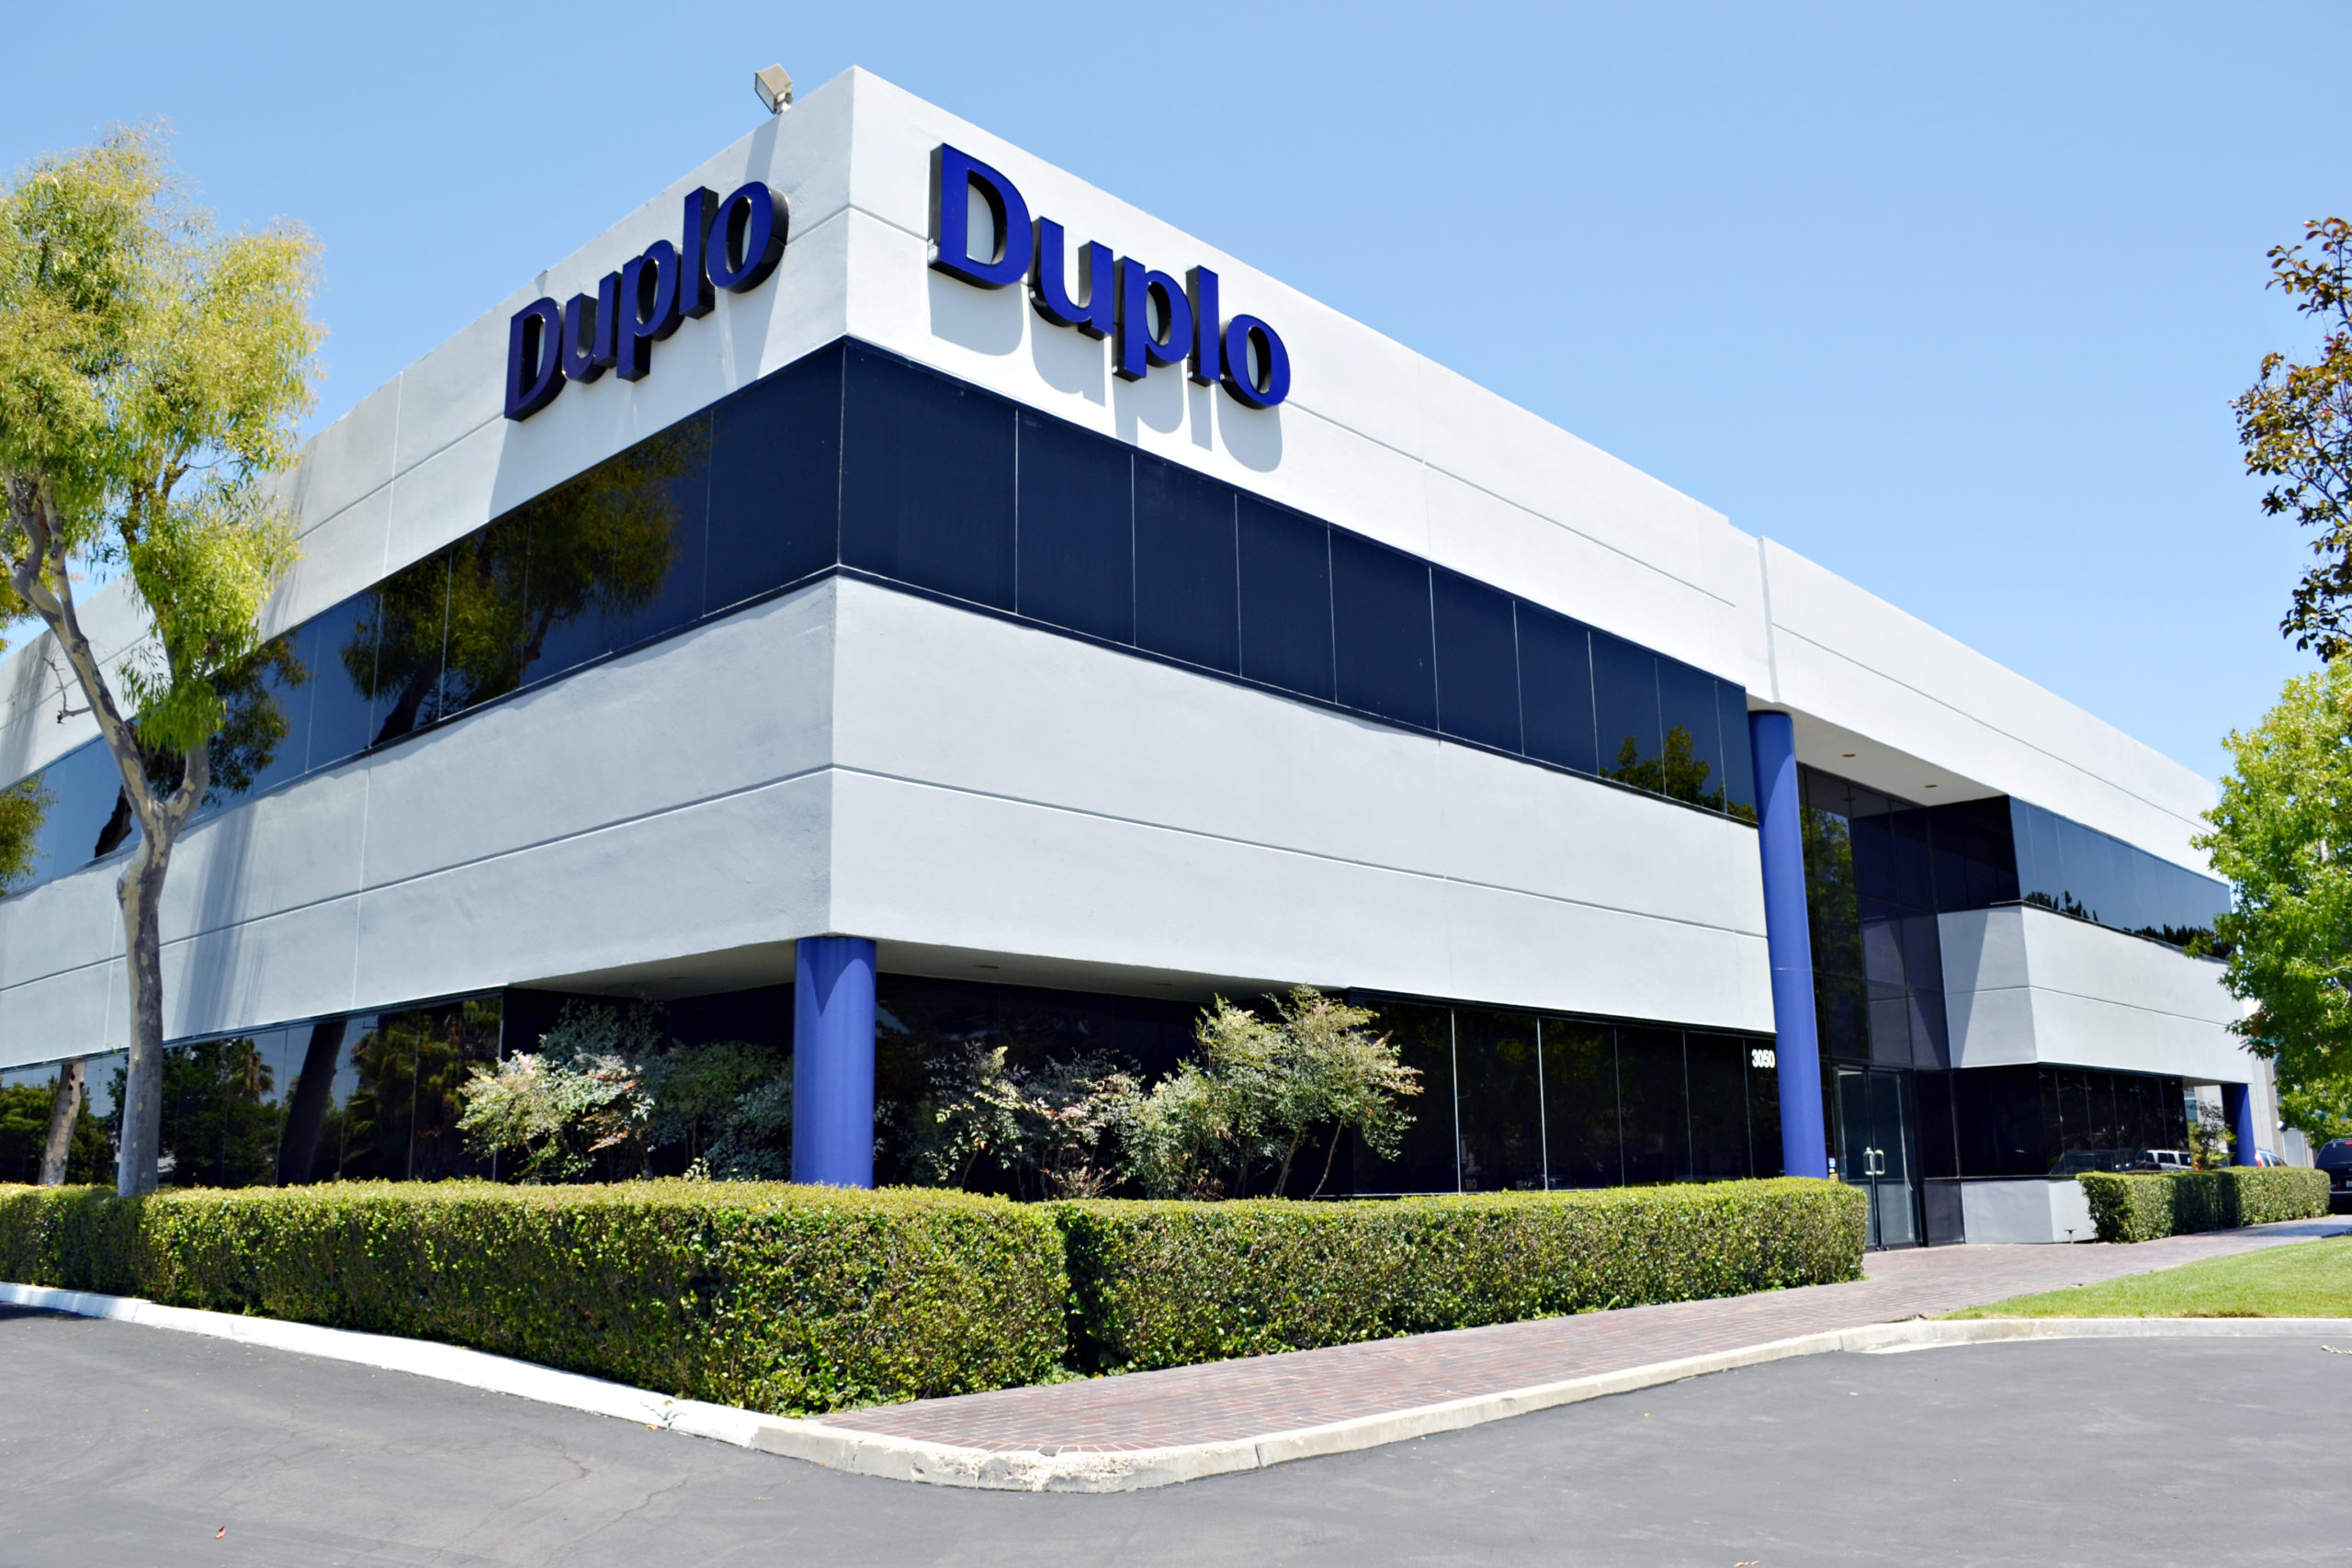 Duplo USA Corporation